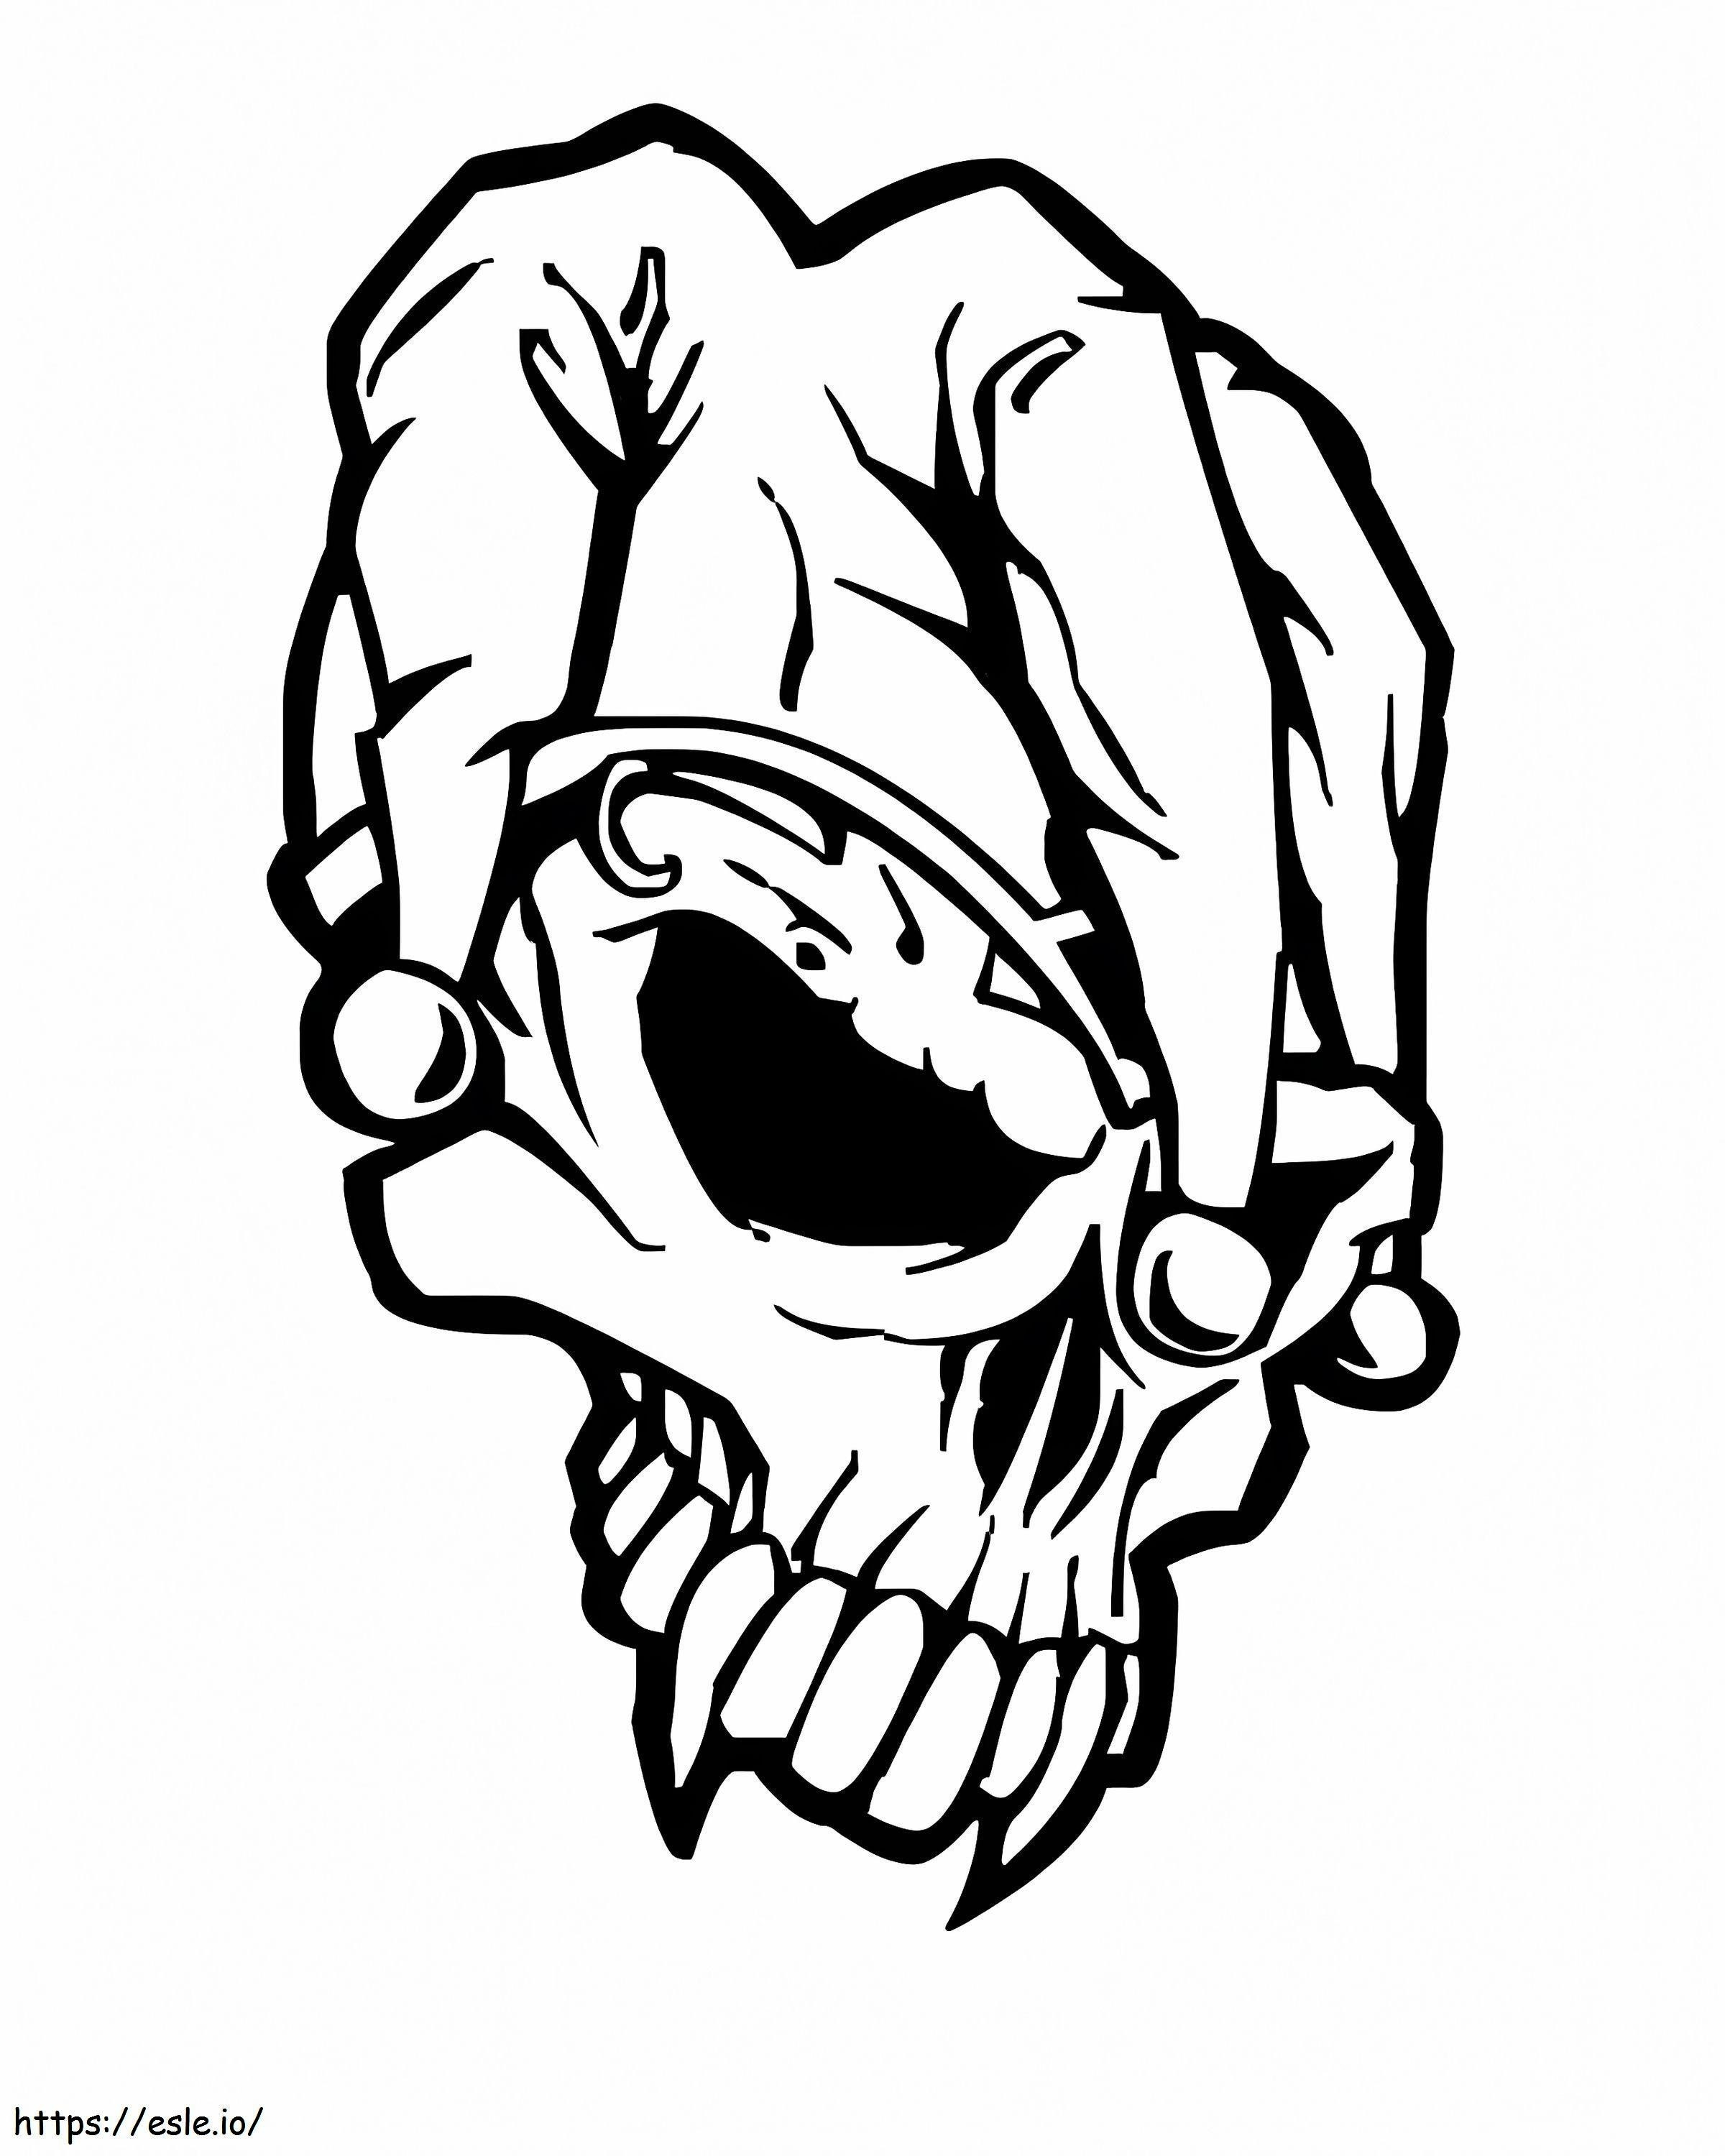 Joker Skull coloring page